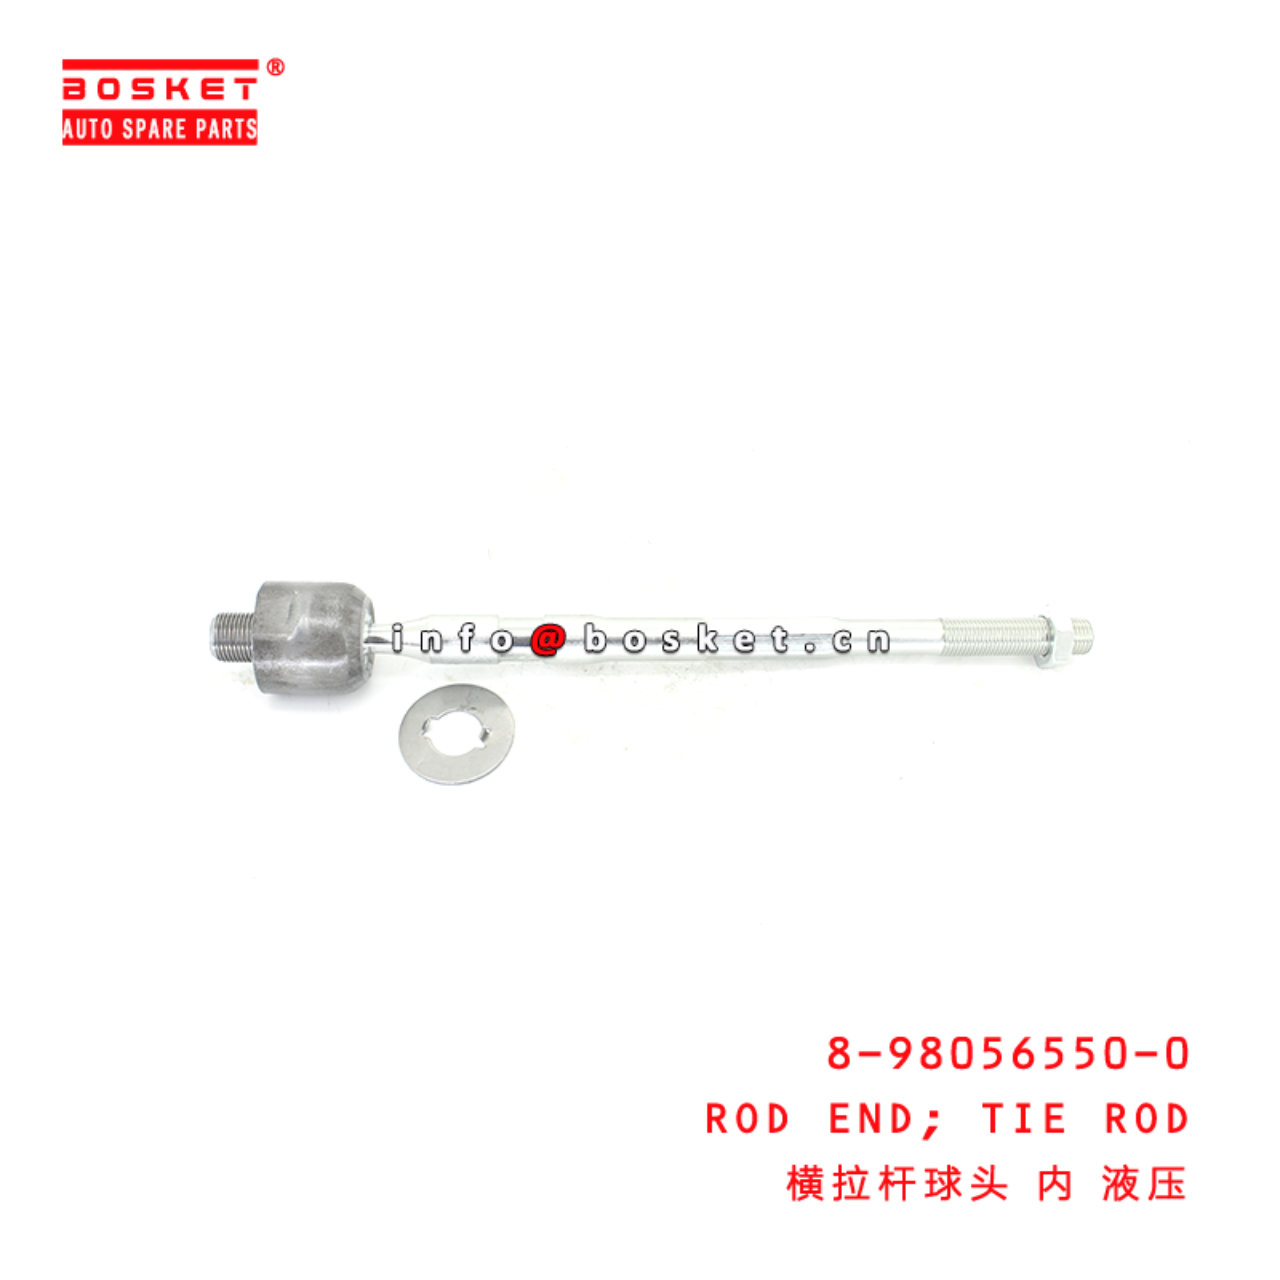 8-98056550-0 Tie Rod Rod End suitable for ISUZU D-MAX  8980565500